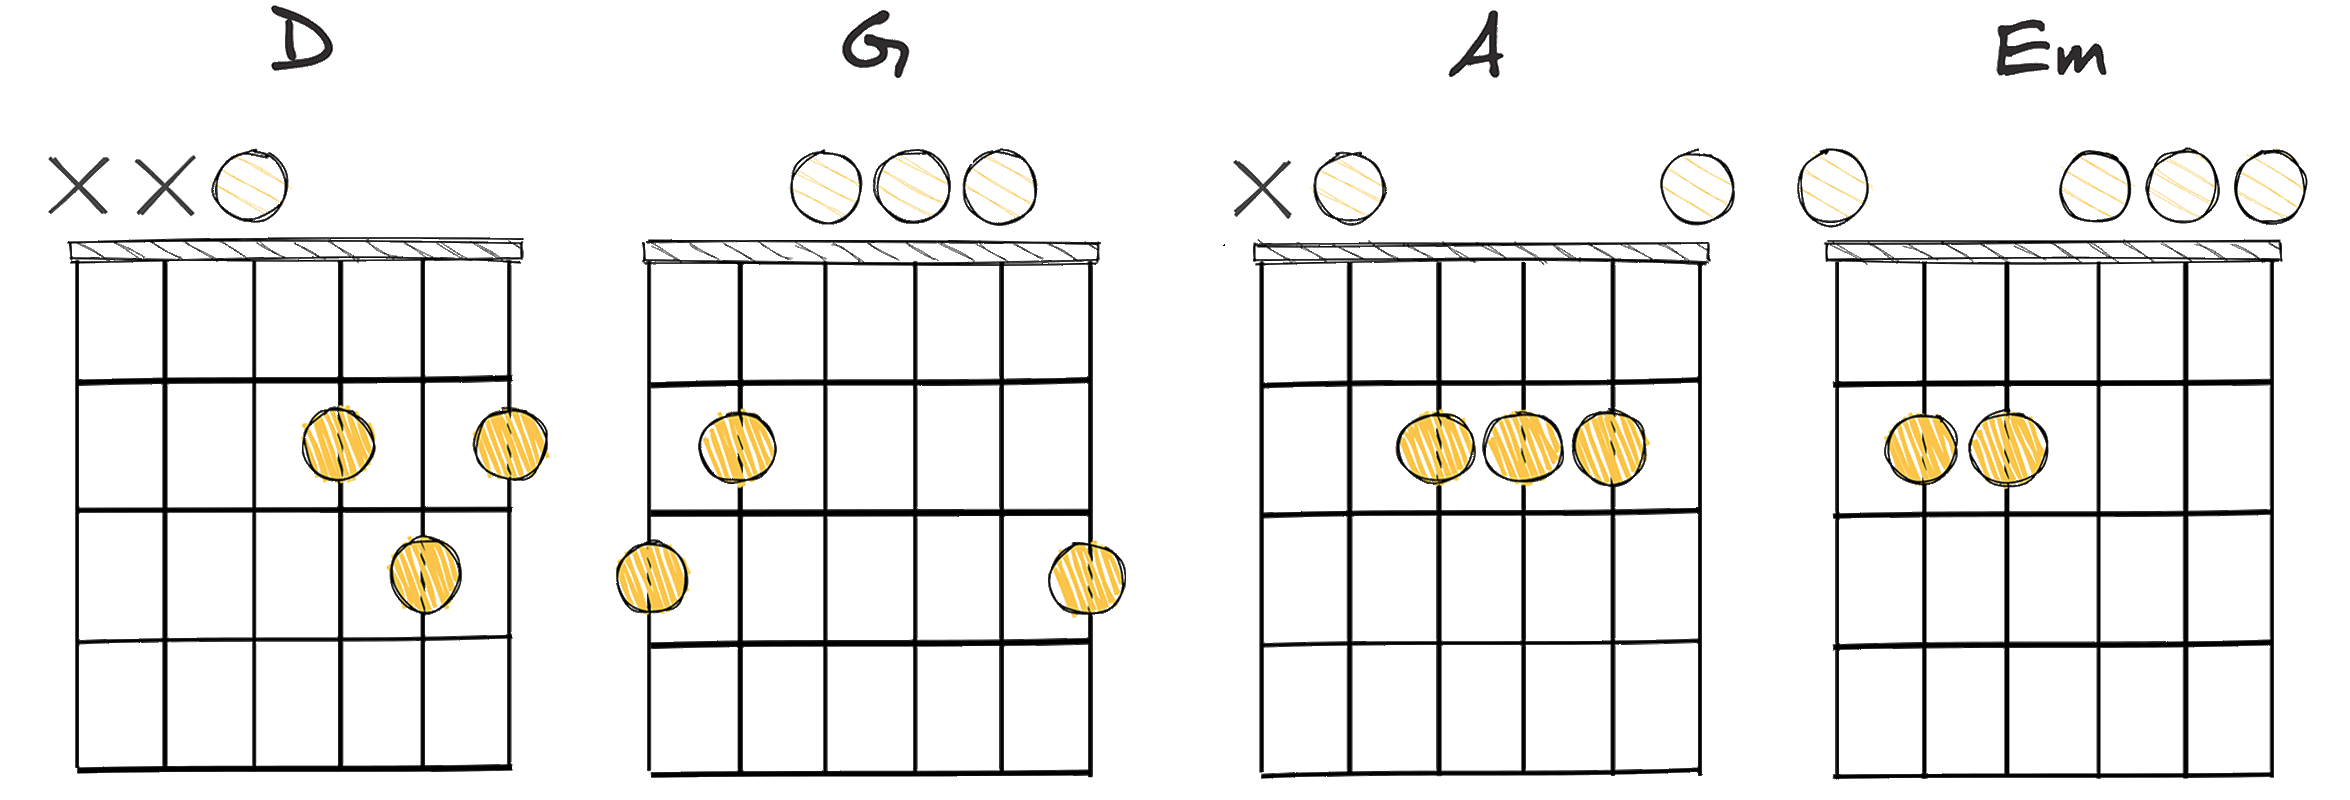 I-V-IV-ii (1-5-4-2) chords diagram